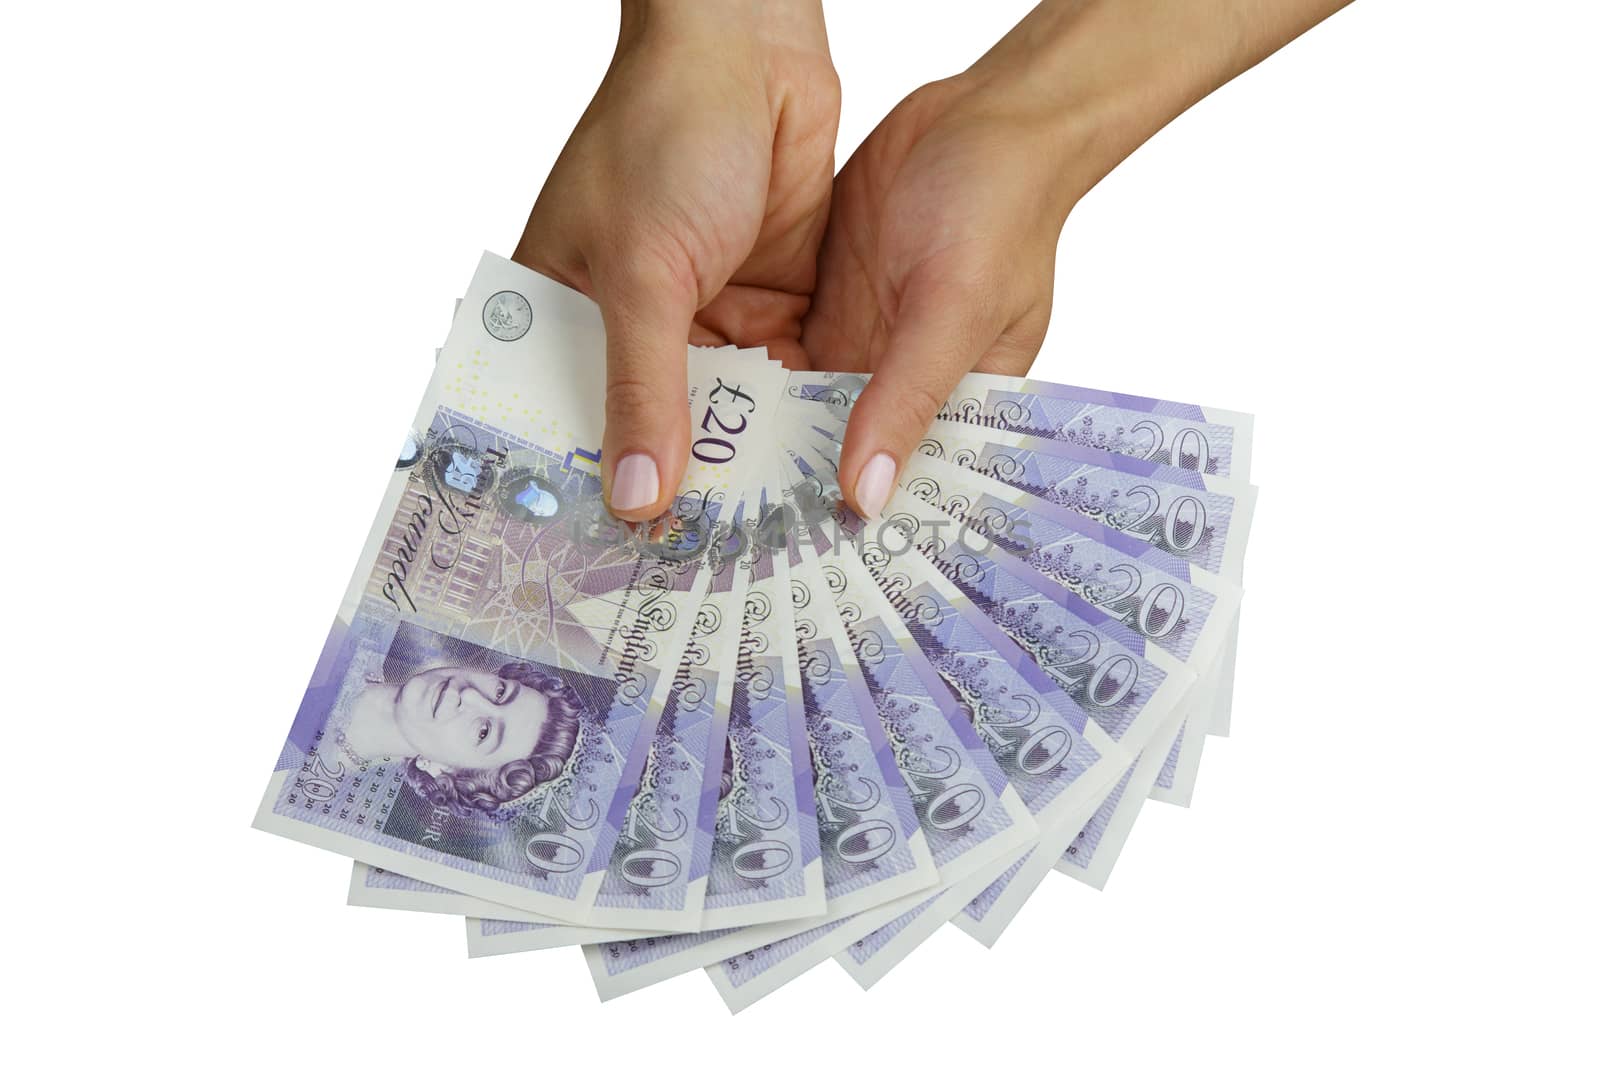 UK money british pounds by zych